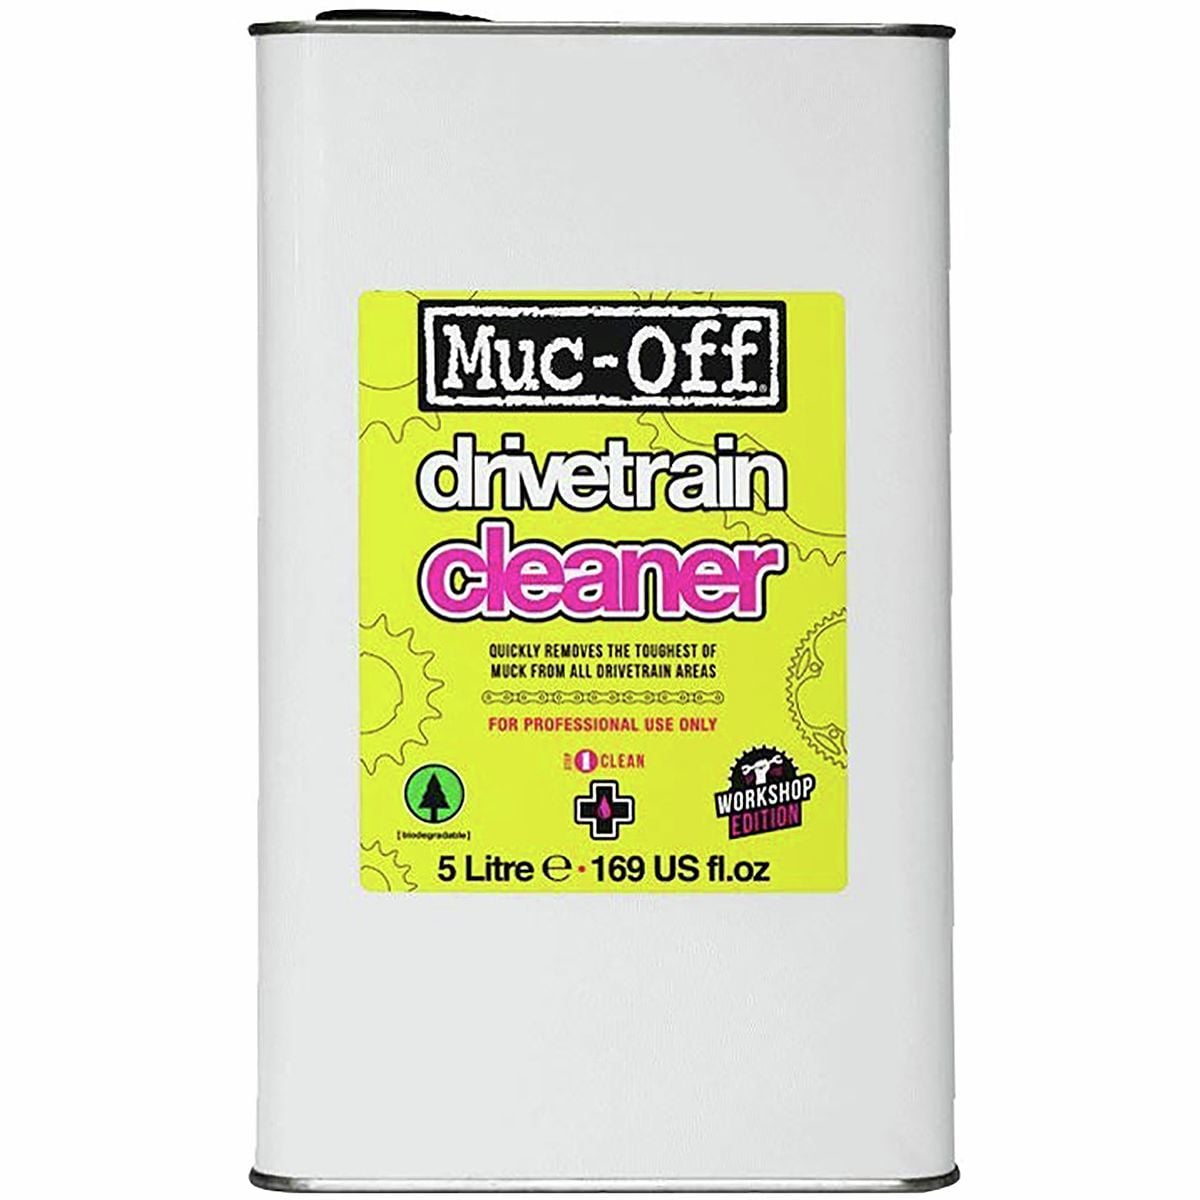 Очиститель трансмиссии Muc-Off очиститель трансмиссии muc off drivetrain cleaner 750ml capped